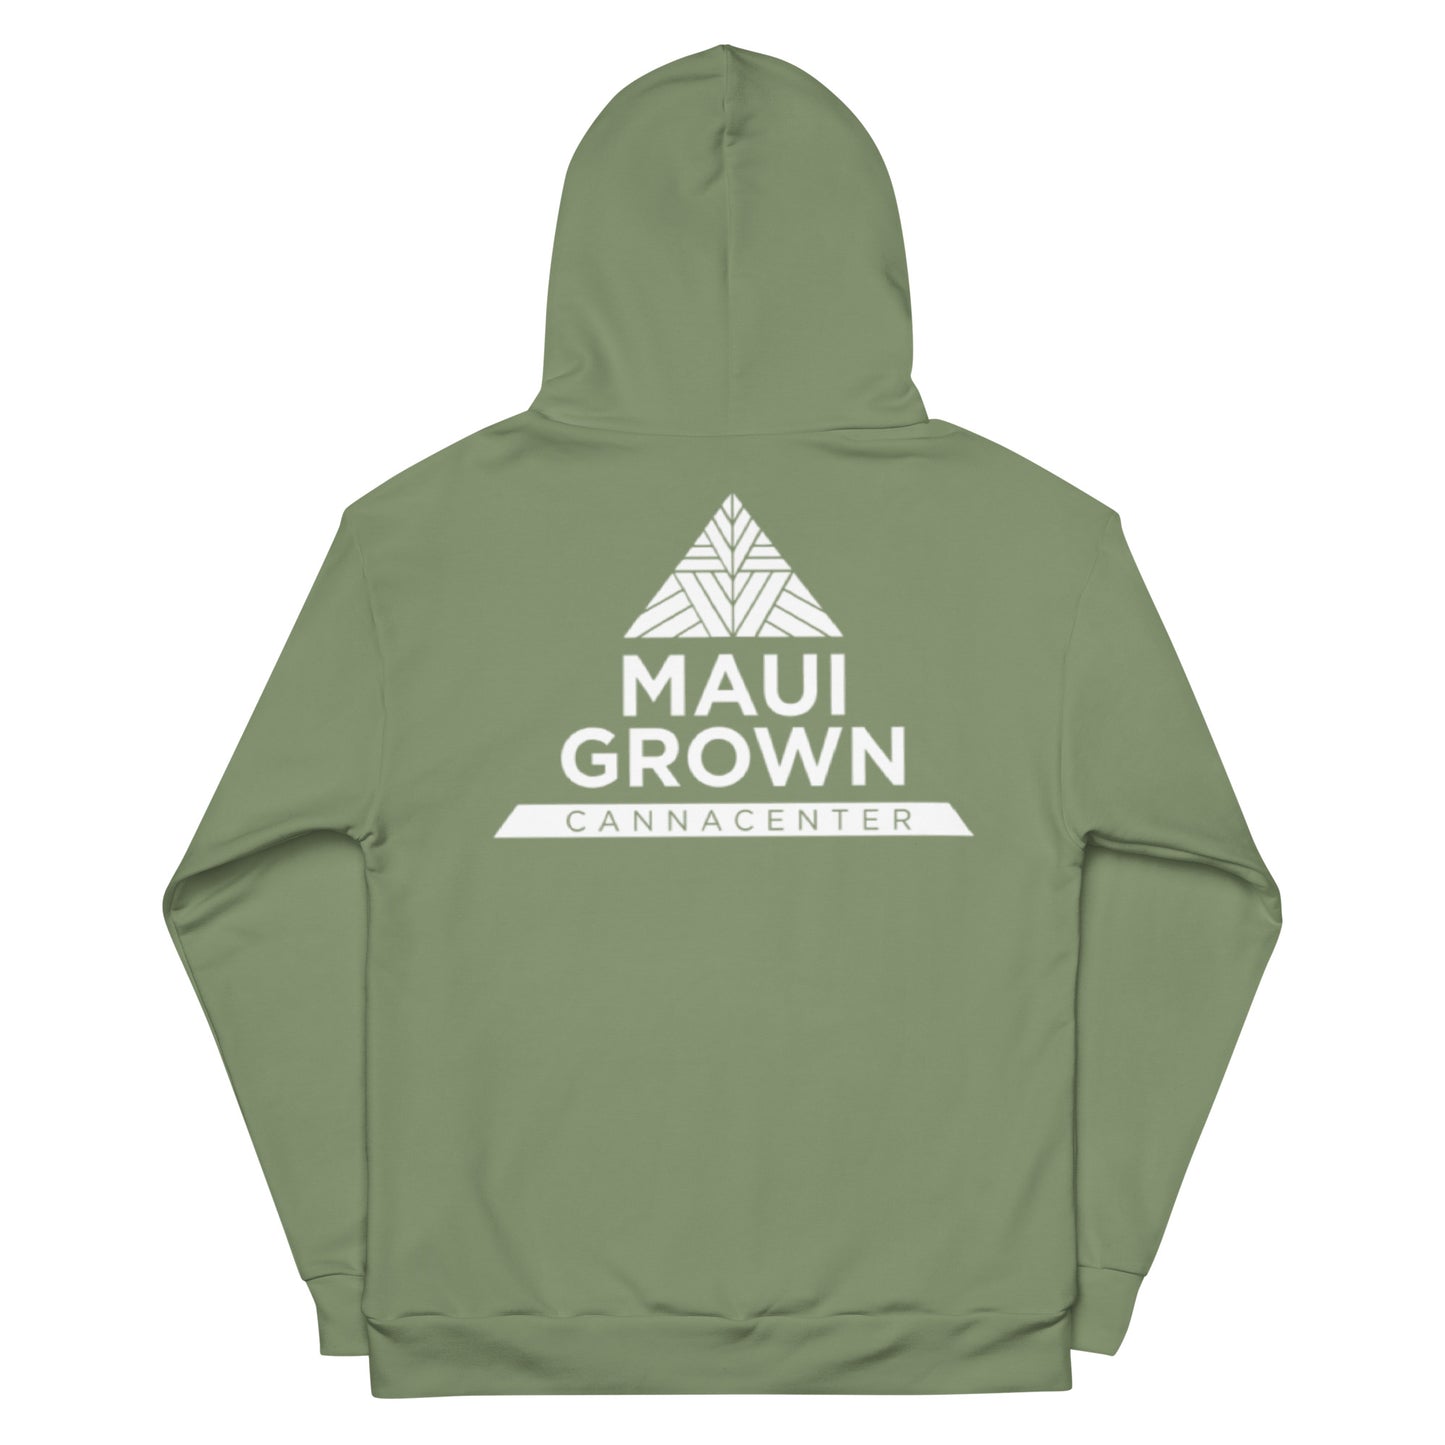 Maui Grown Cannacenter Unisex Hoodie - Camouflage Green